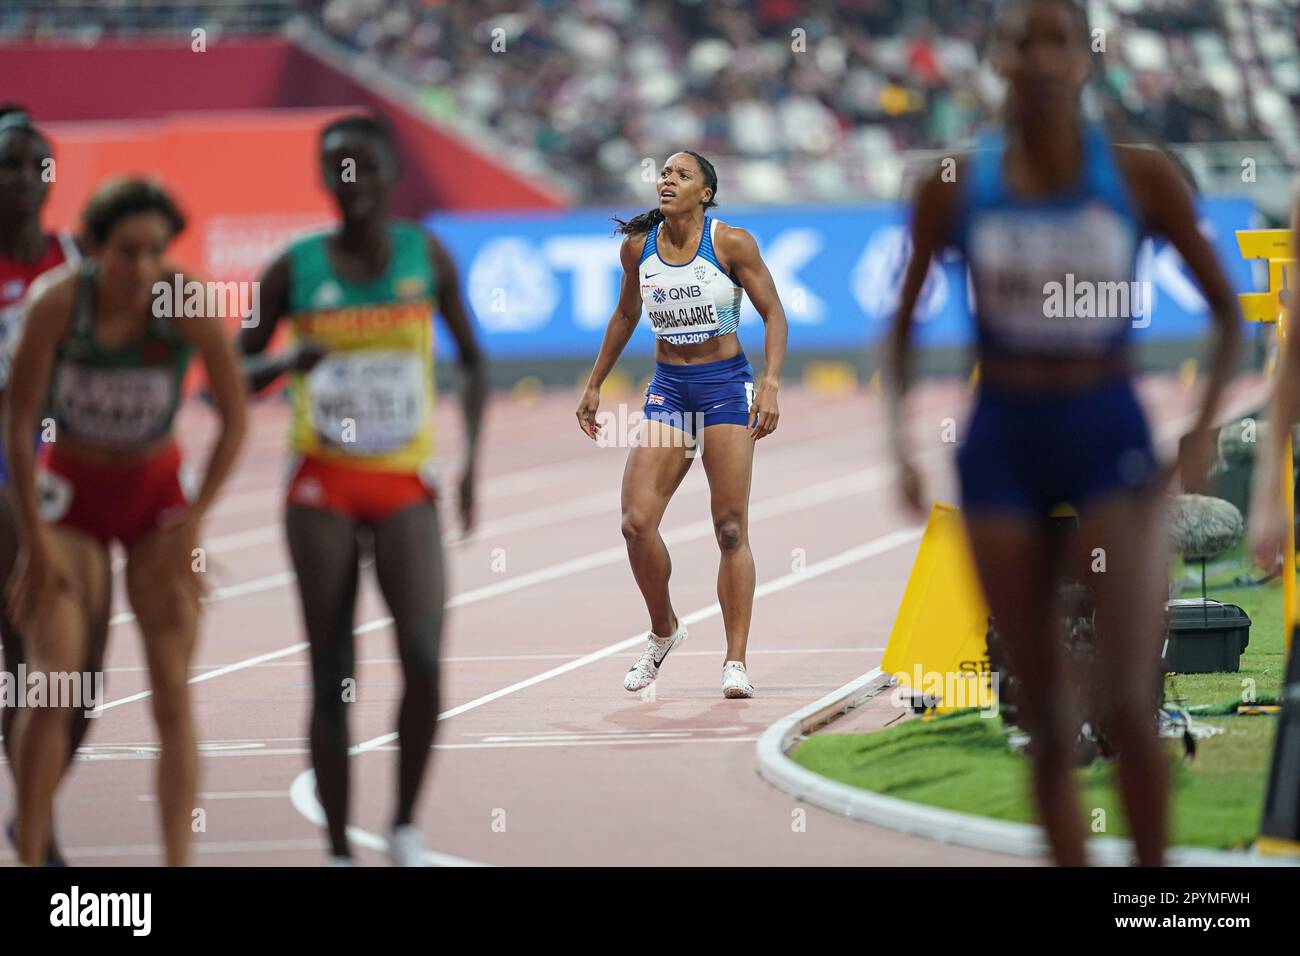 Shelayna Oskan-Clarke running the 800m at the 2019 World Athletics ...